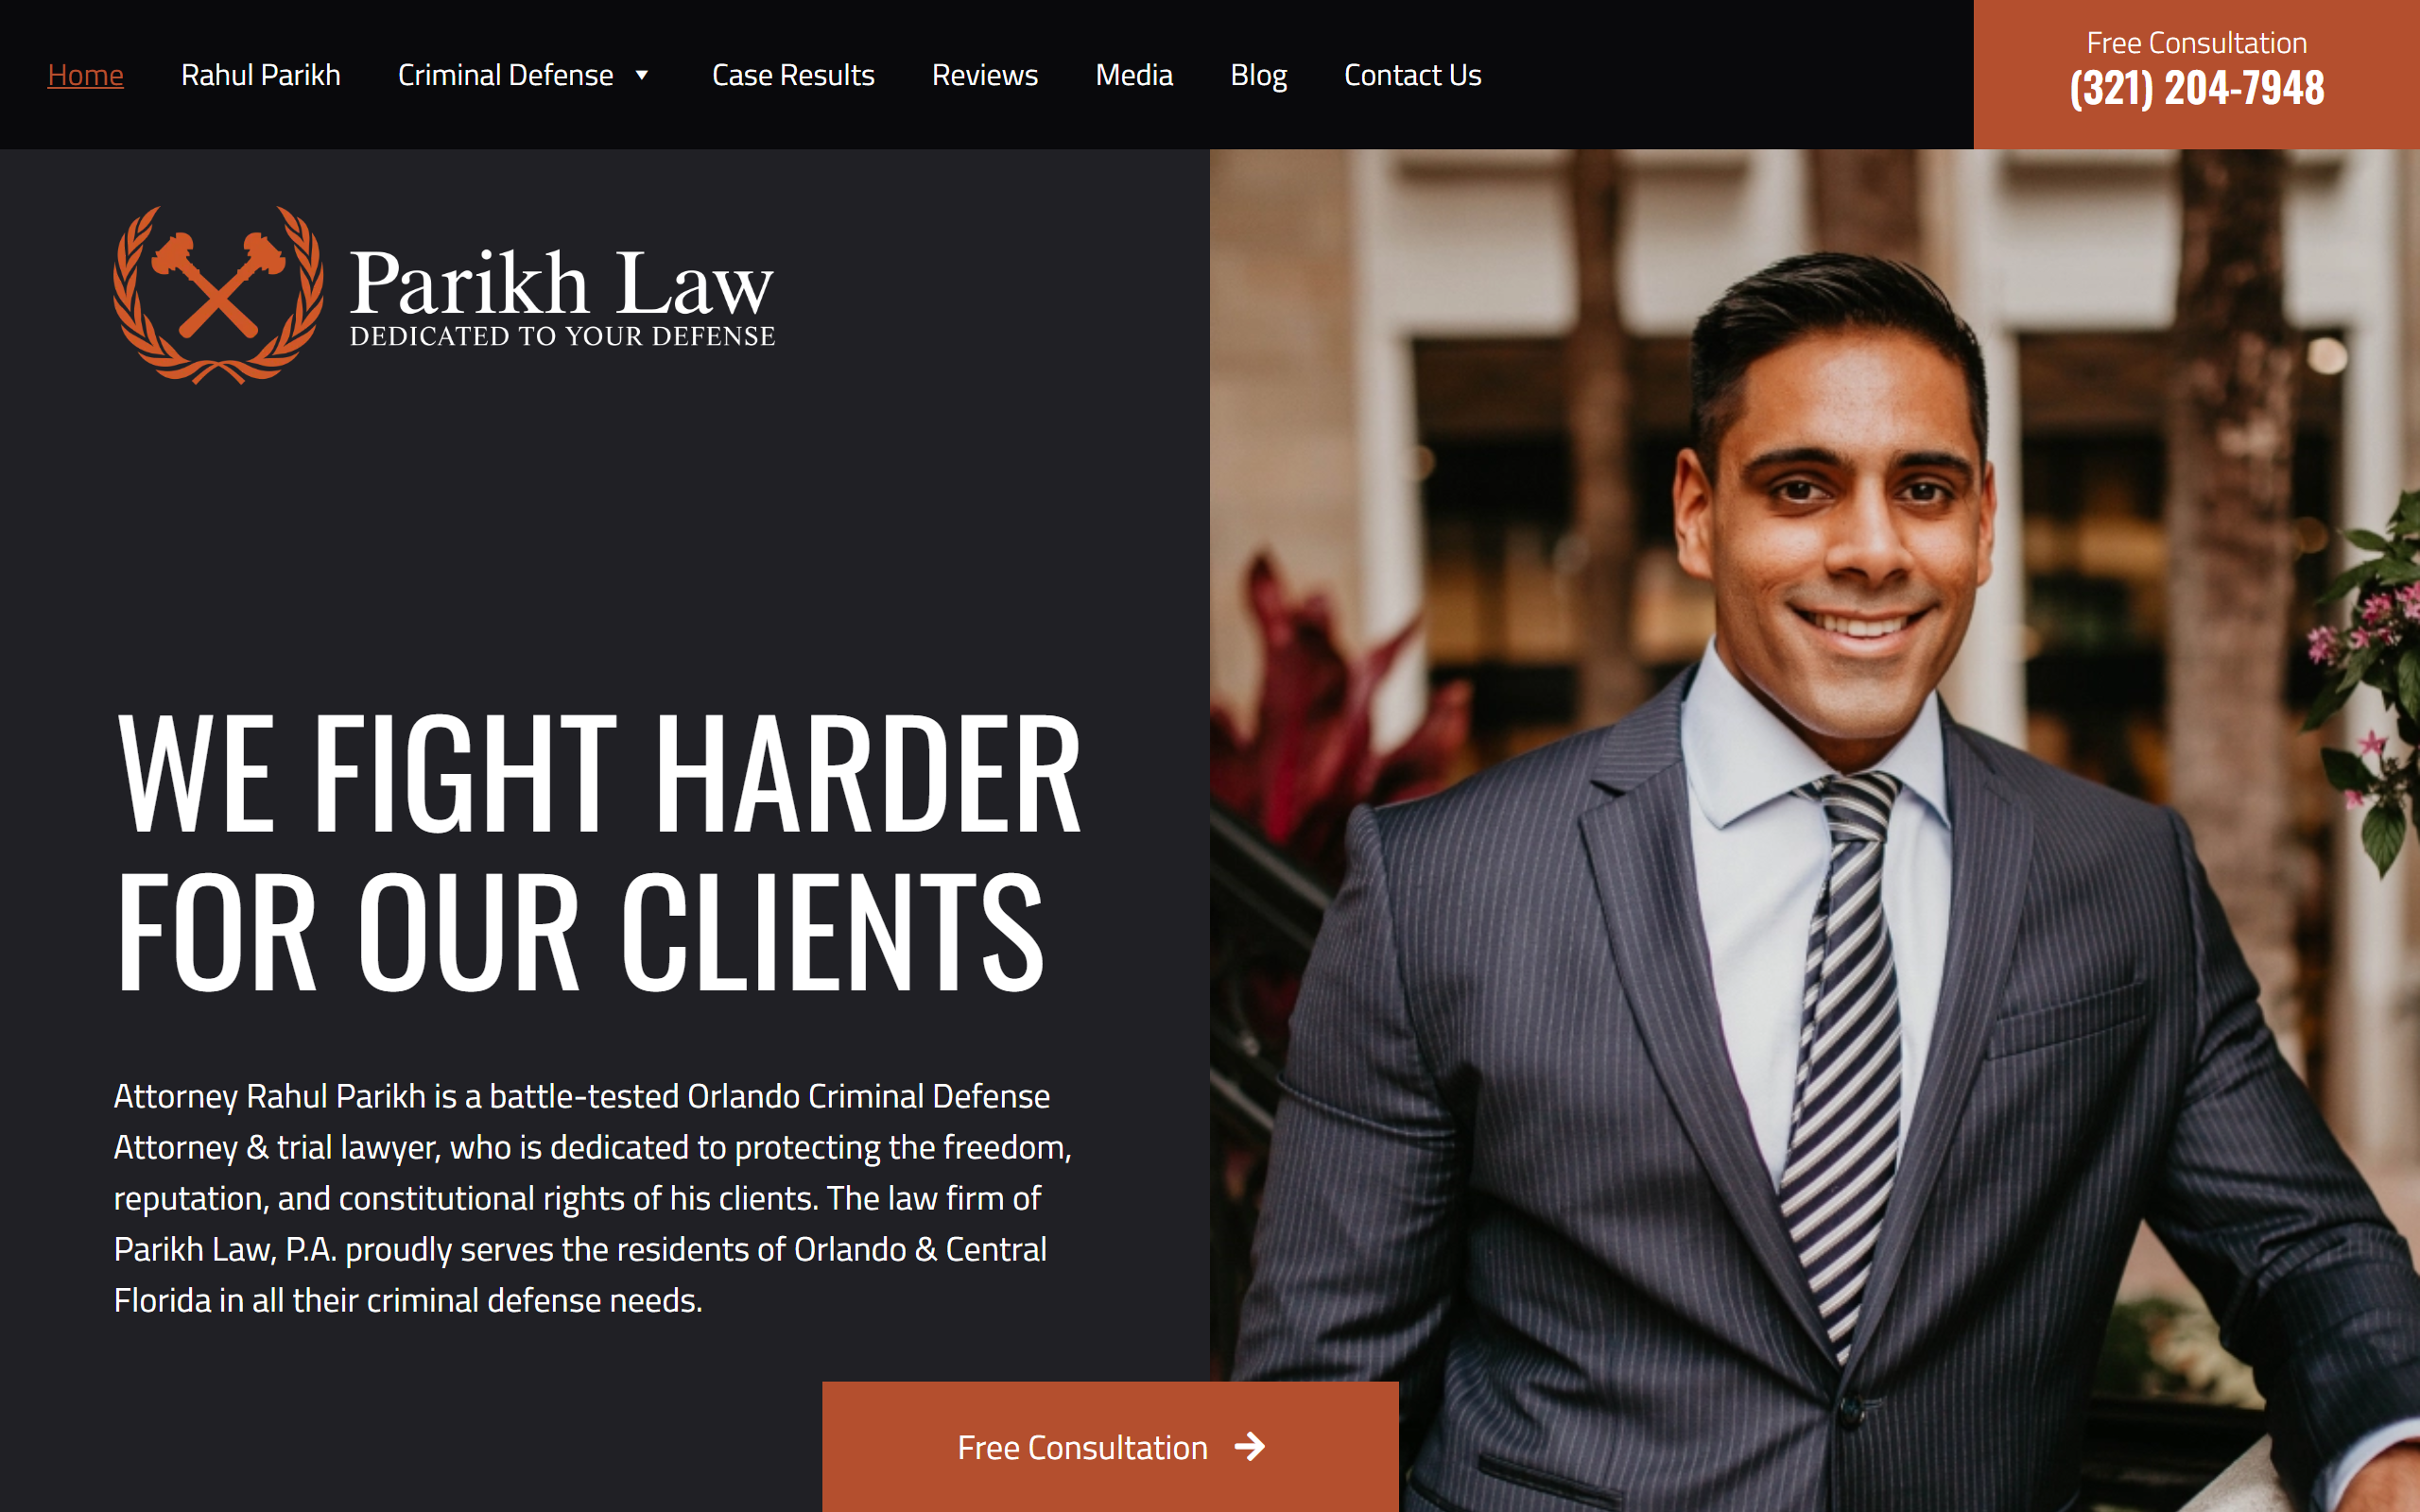 Parikh Law firm websites